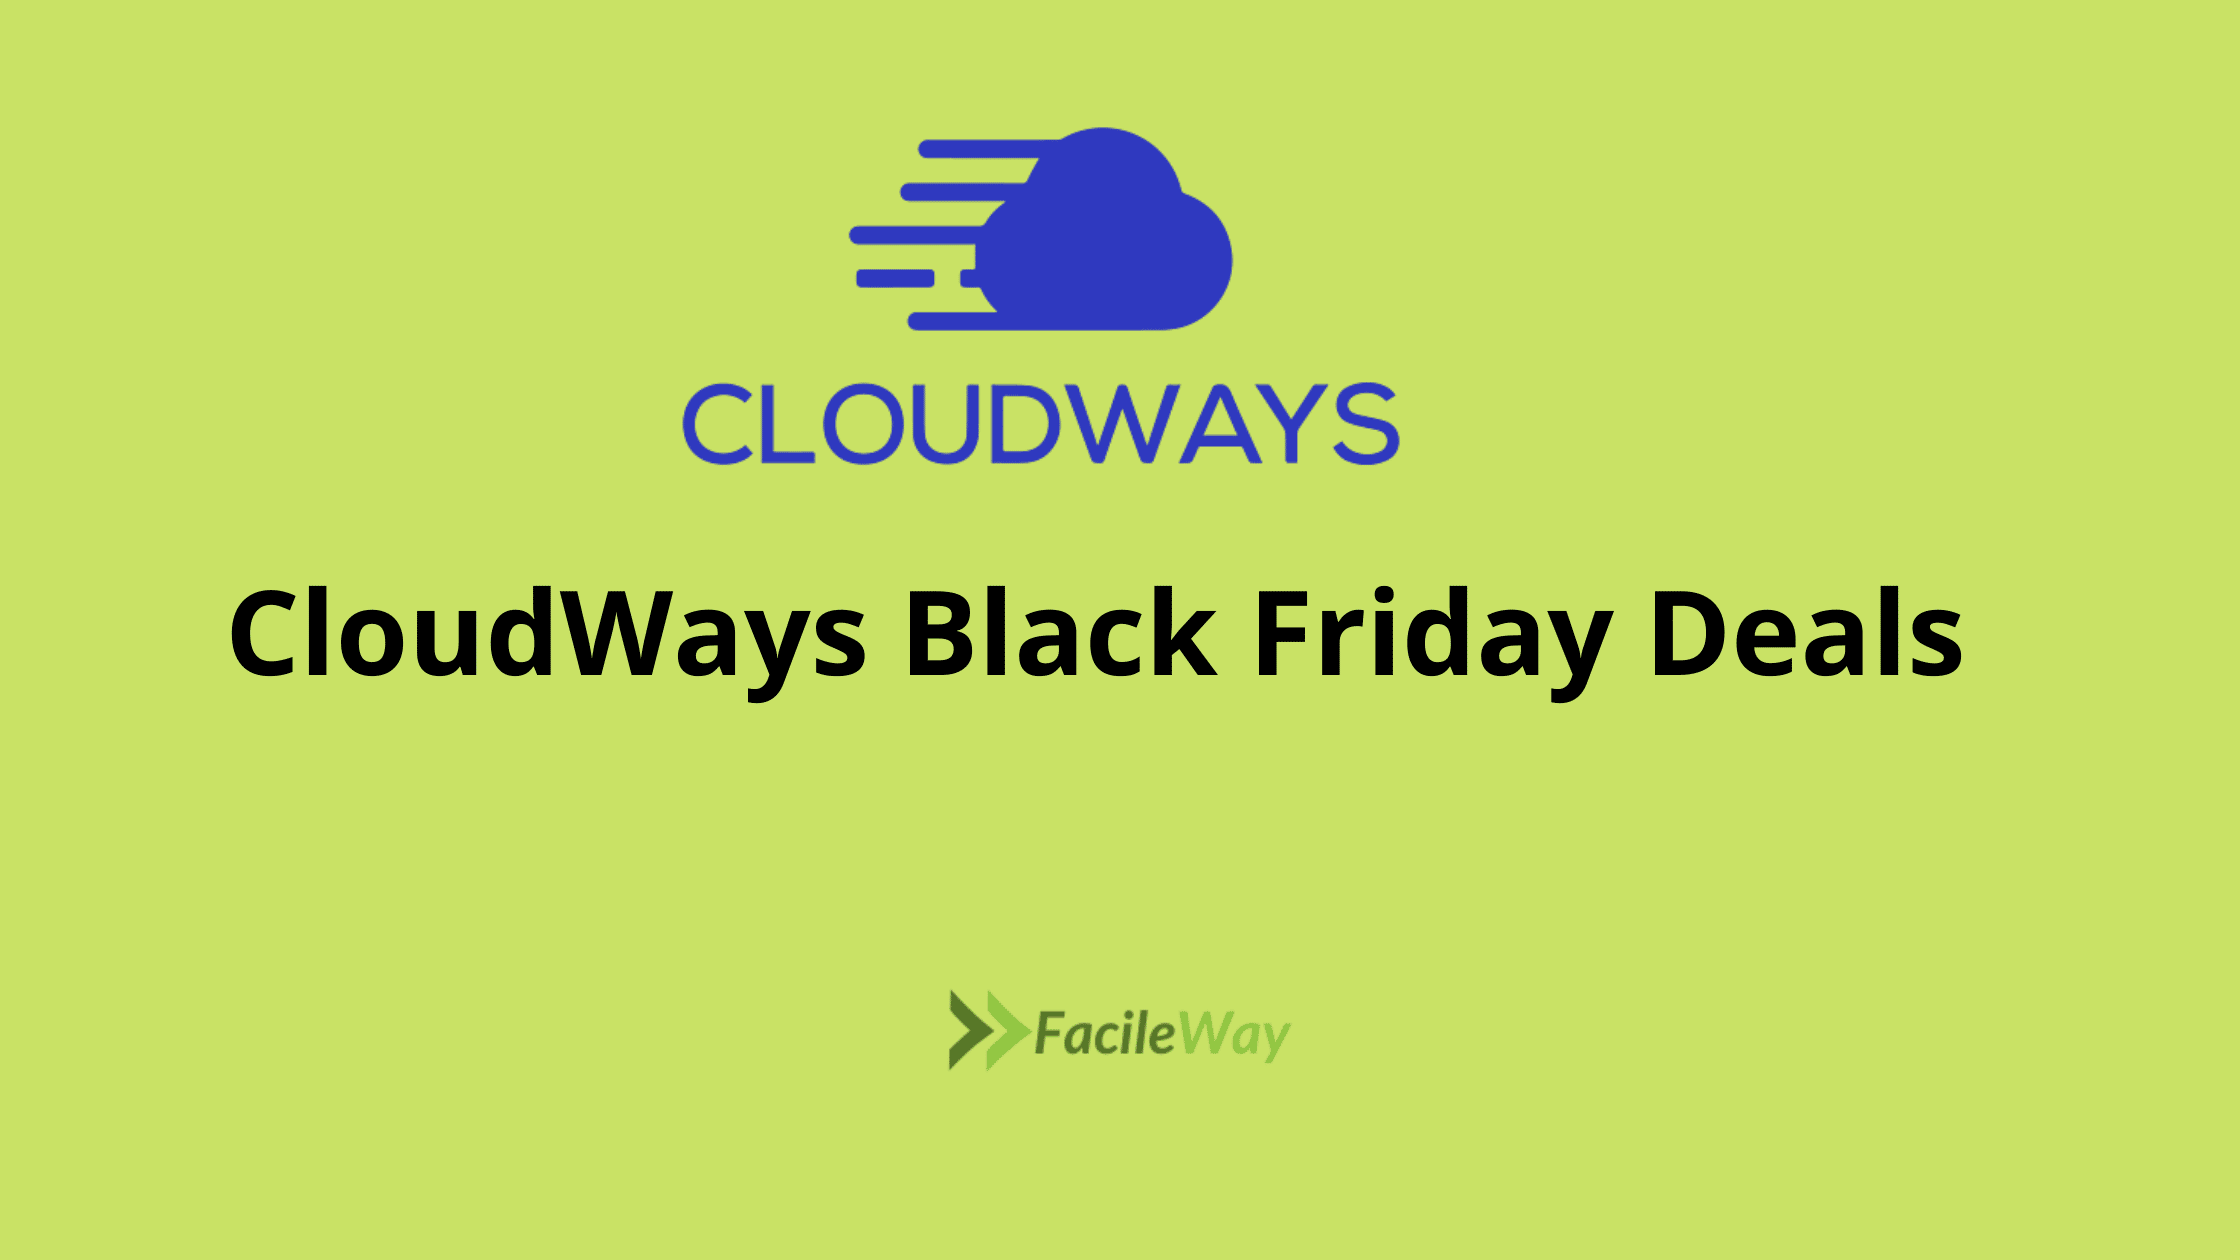 CloudWays Black Friday Deals